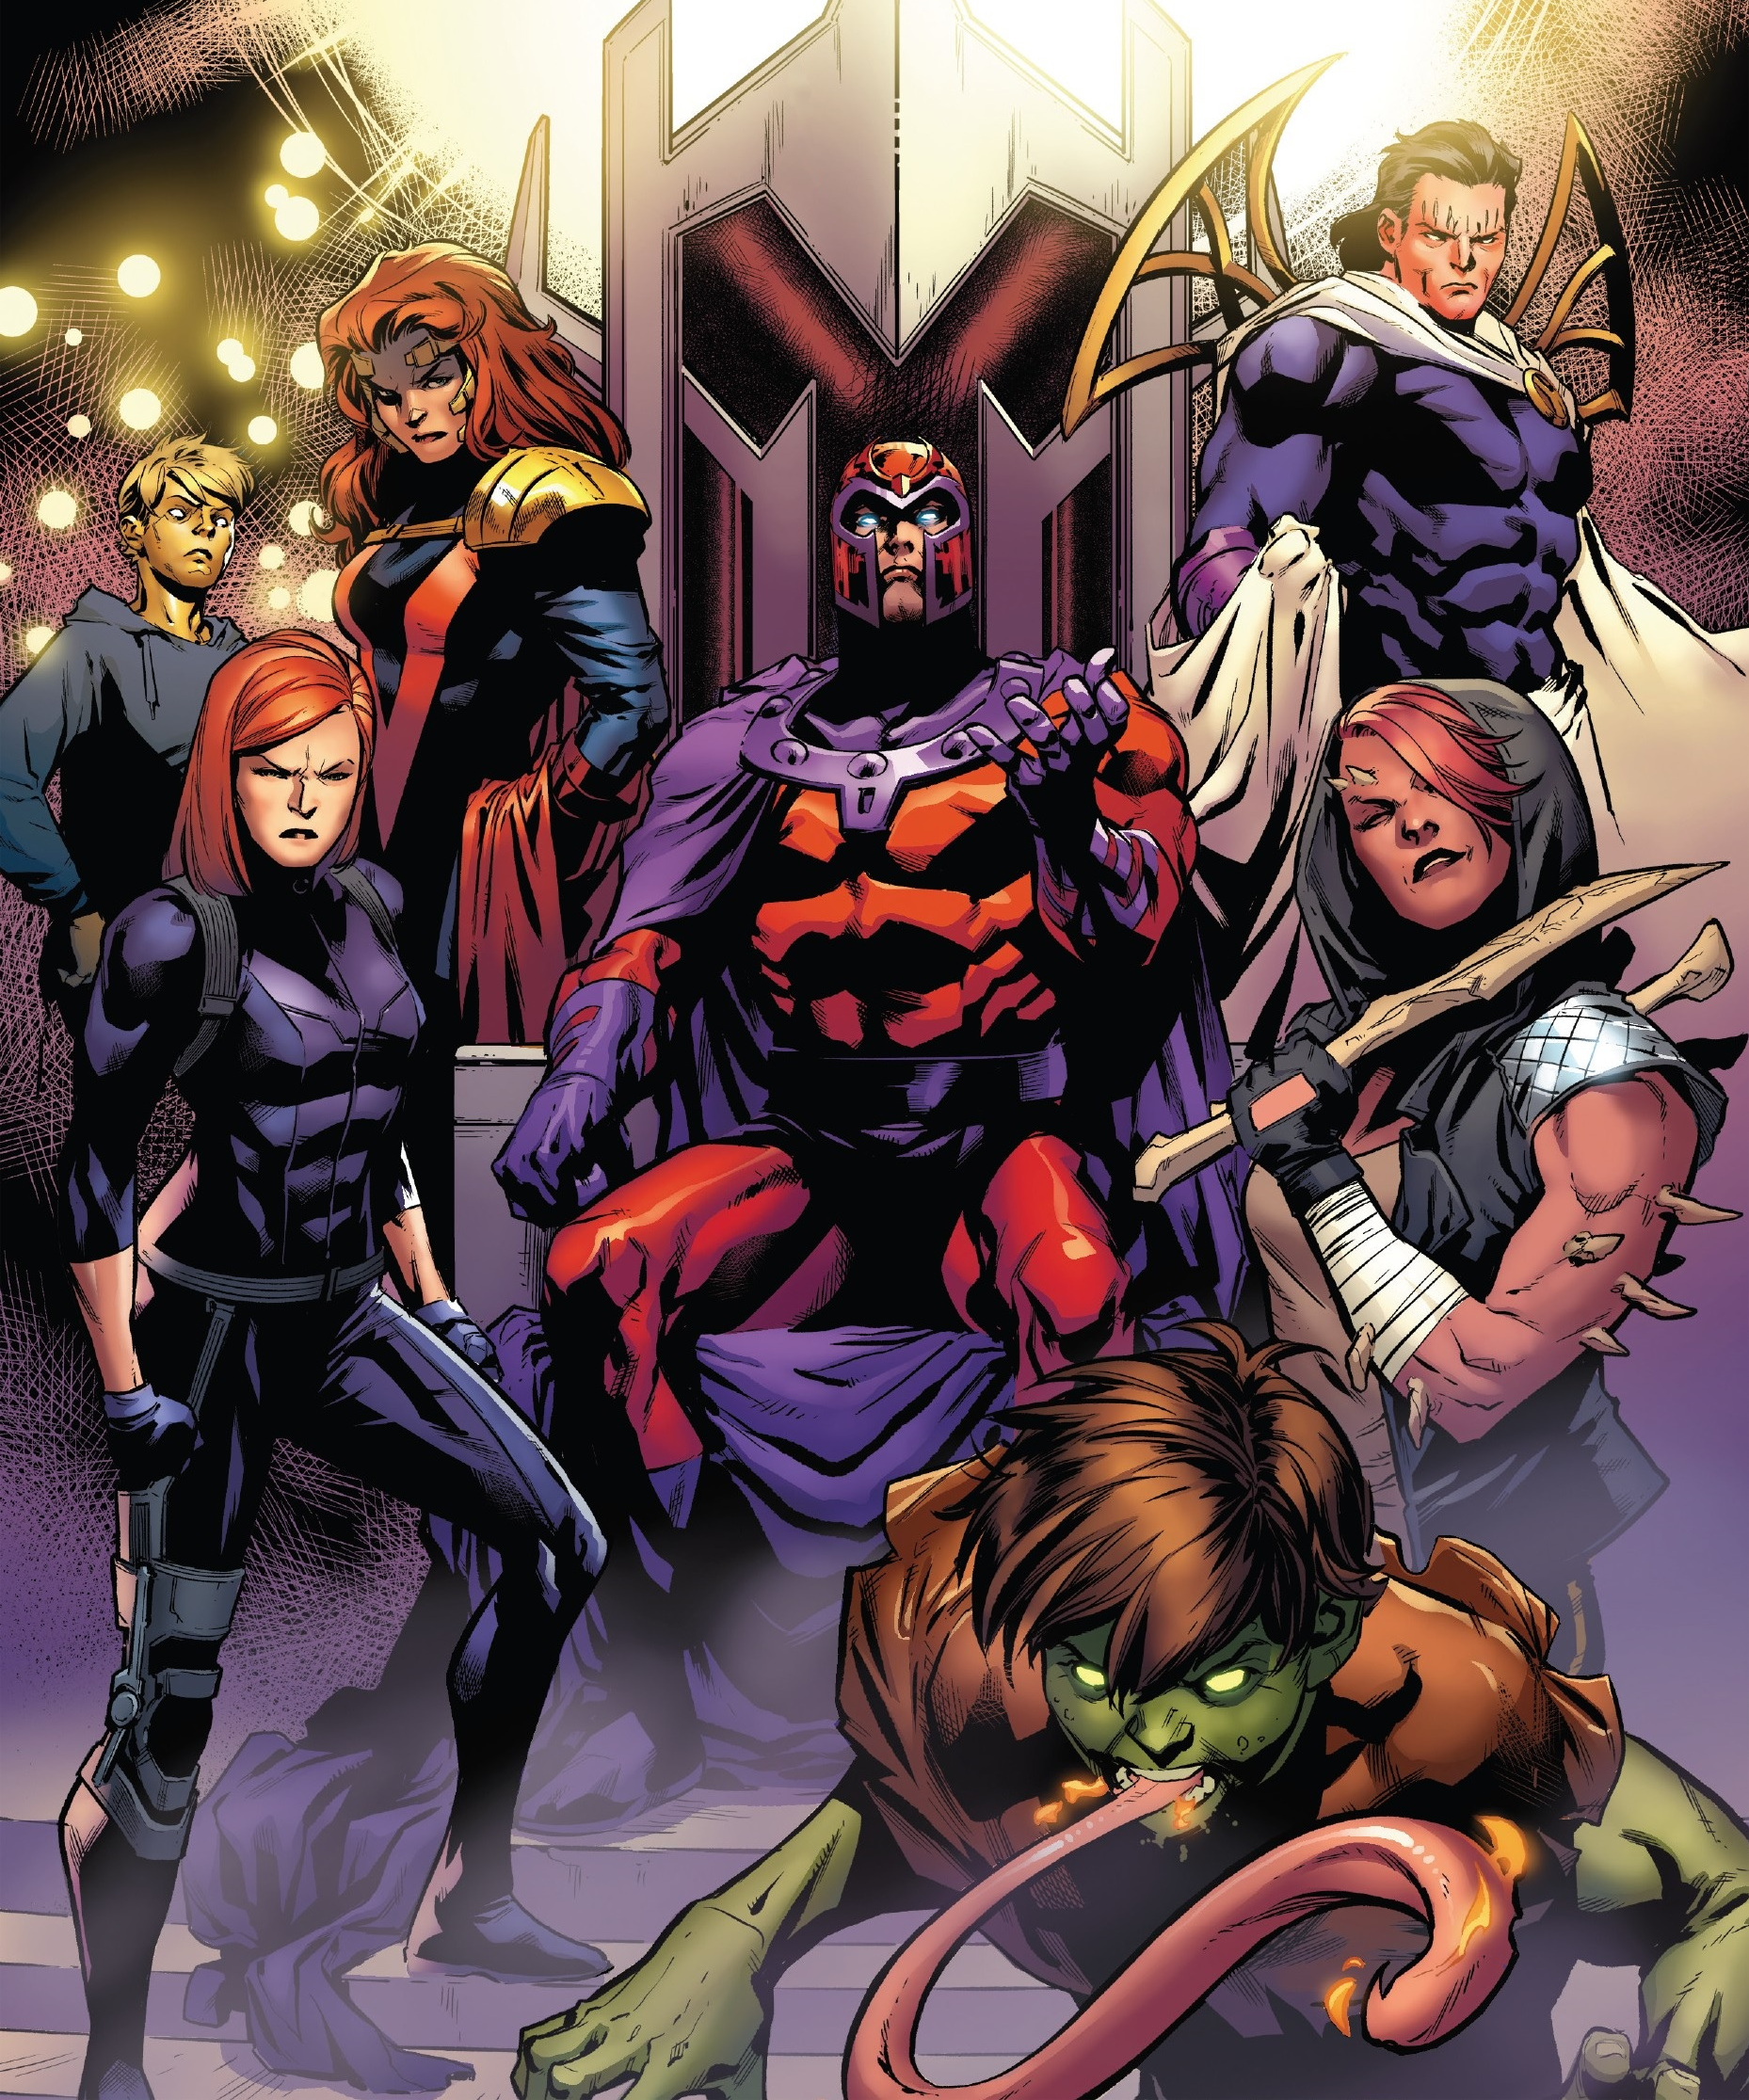 Mutants marvel. Братство мутантов Марвел. Люди Икс братство мутантов. Marvel Comics братство мутантов. Братство мутантов Марвел комикс.